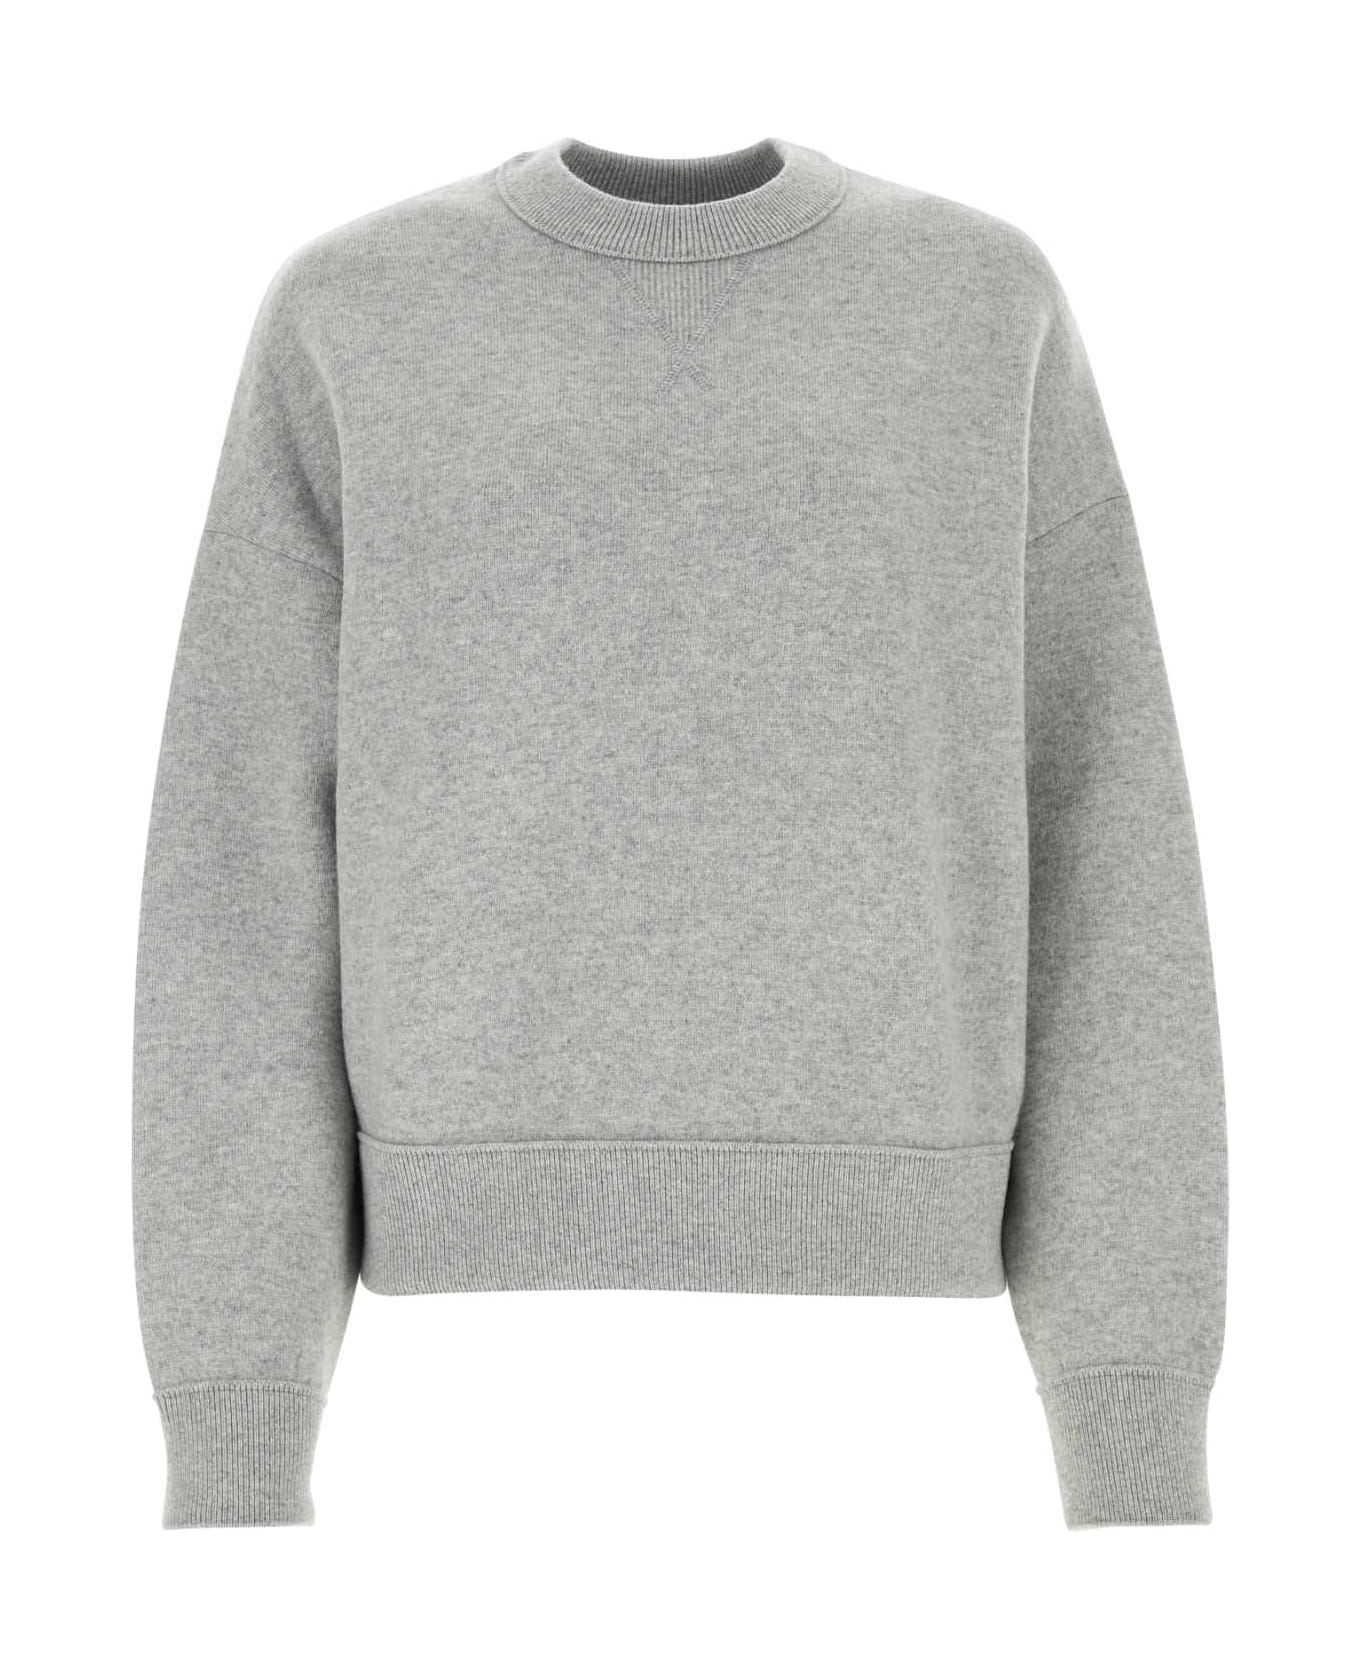 Bottega Veneta Melange Grey Cashmere Blend Sweater - GREYMELANGE